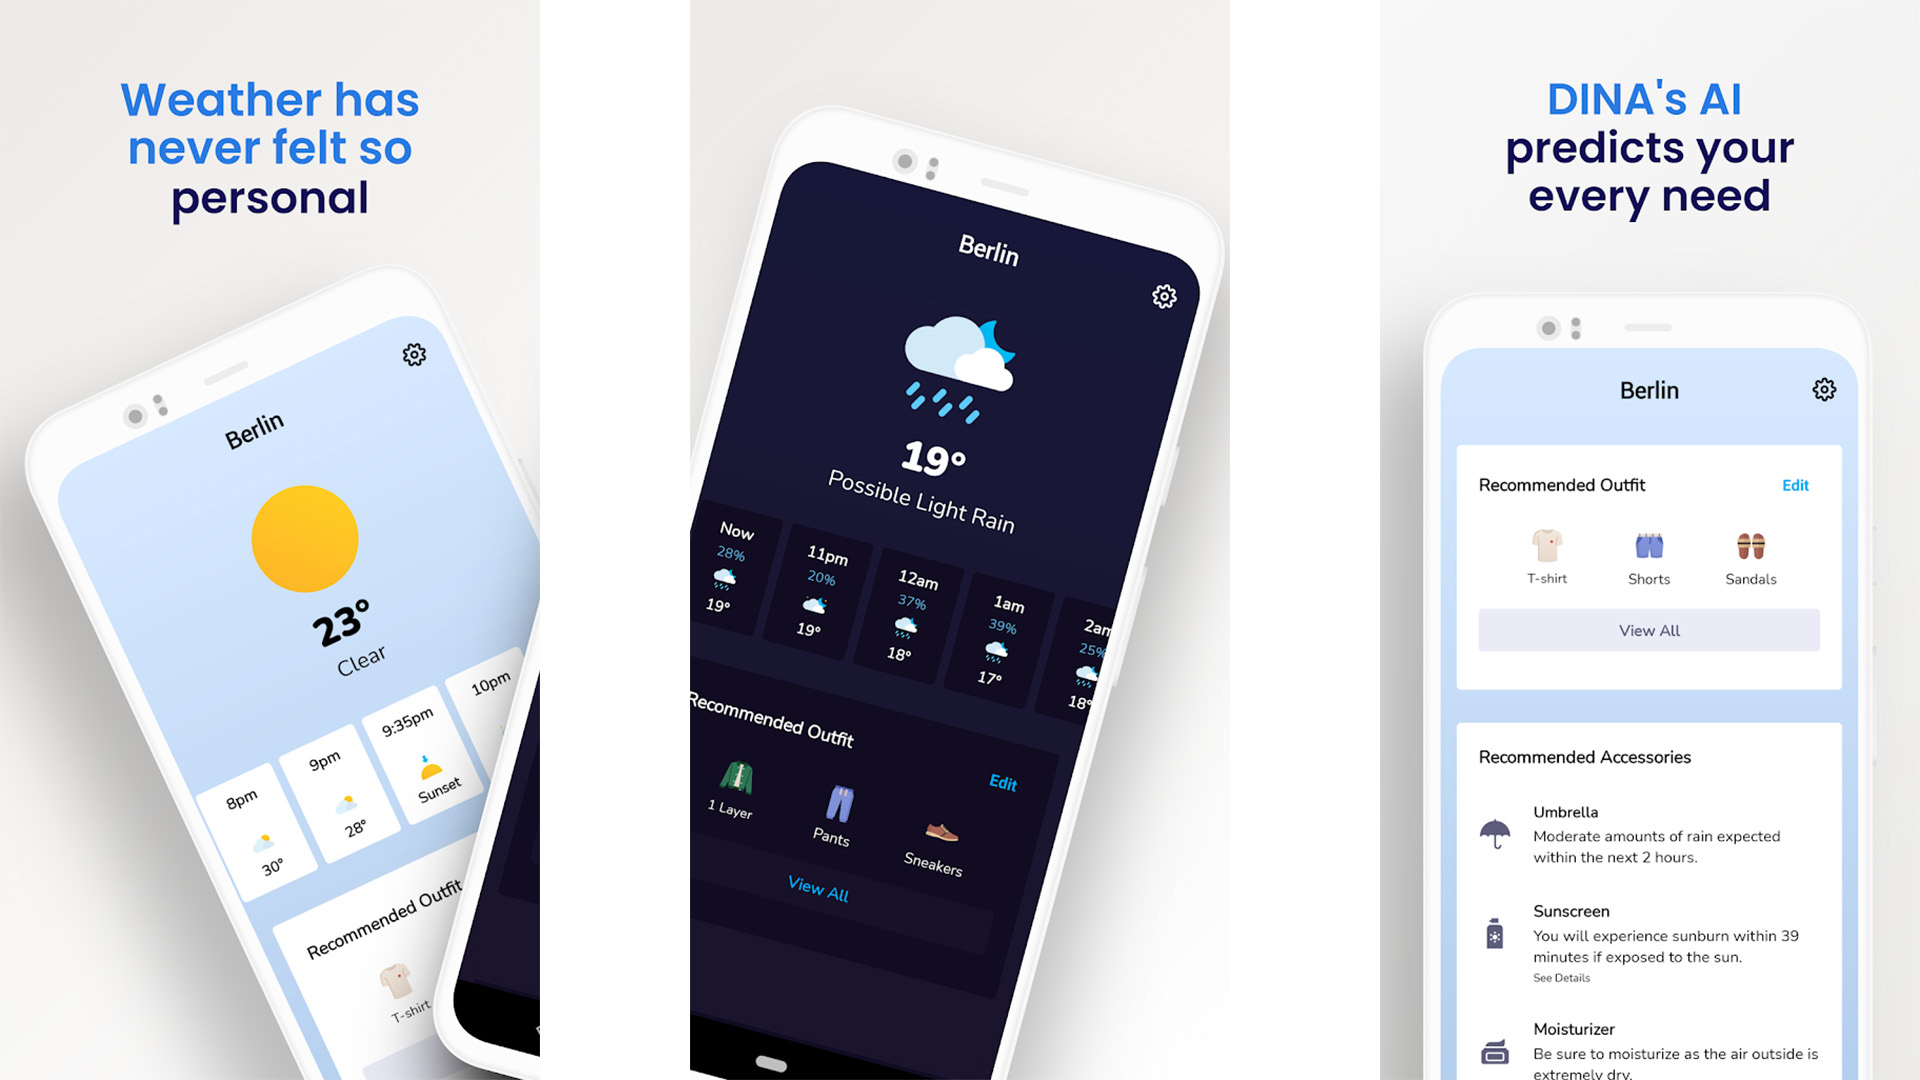 DINA Personalized Weather screenshot 2022